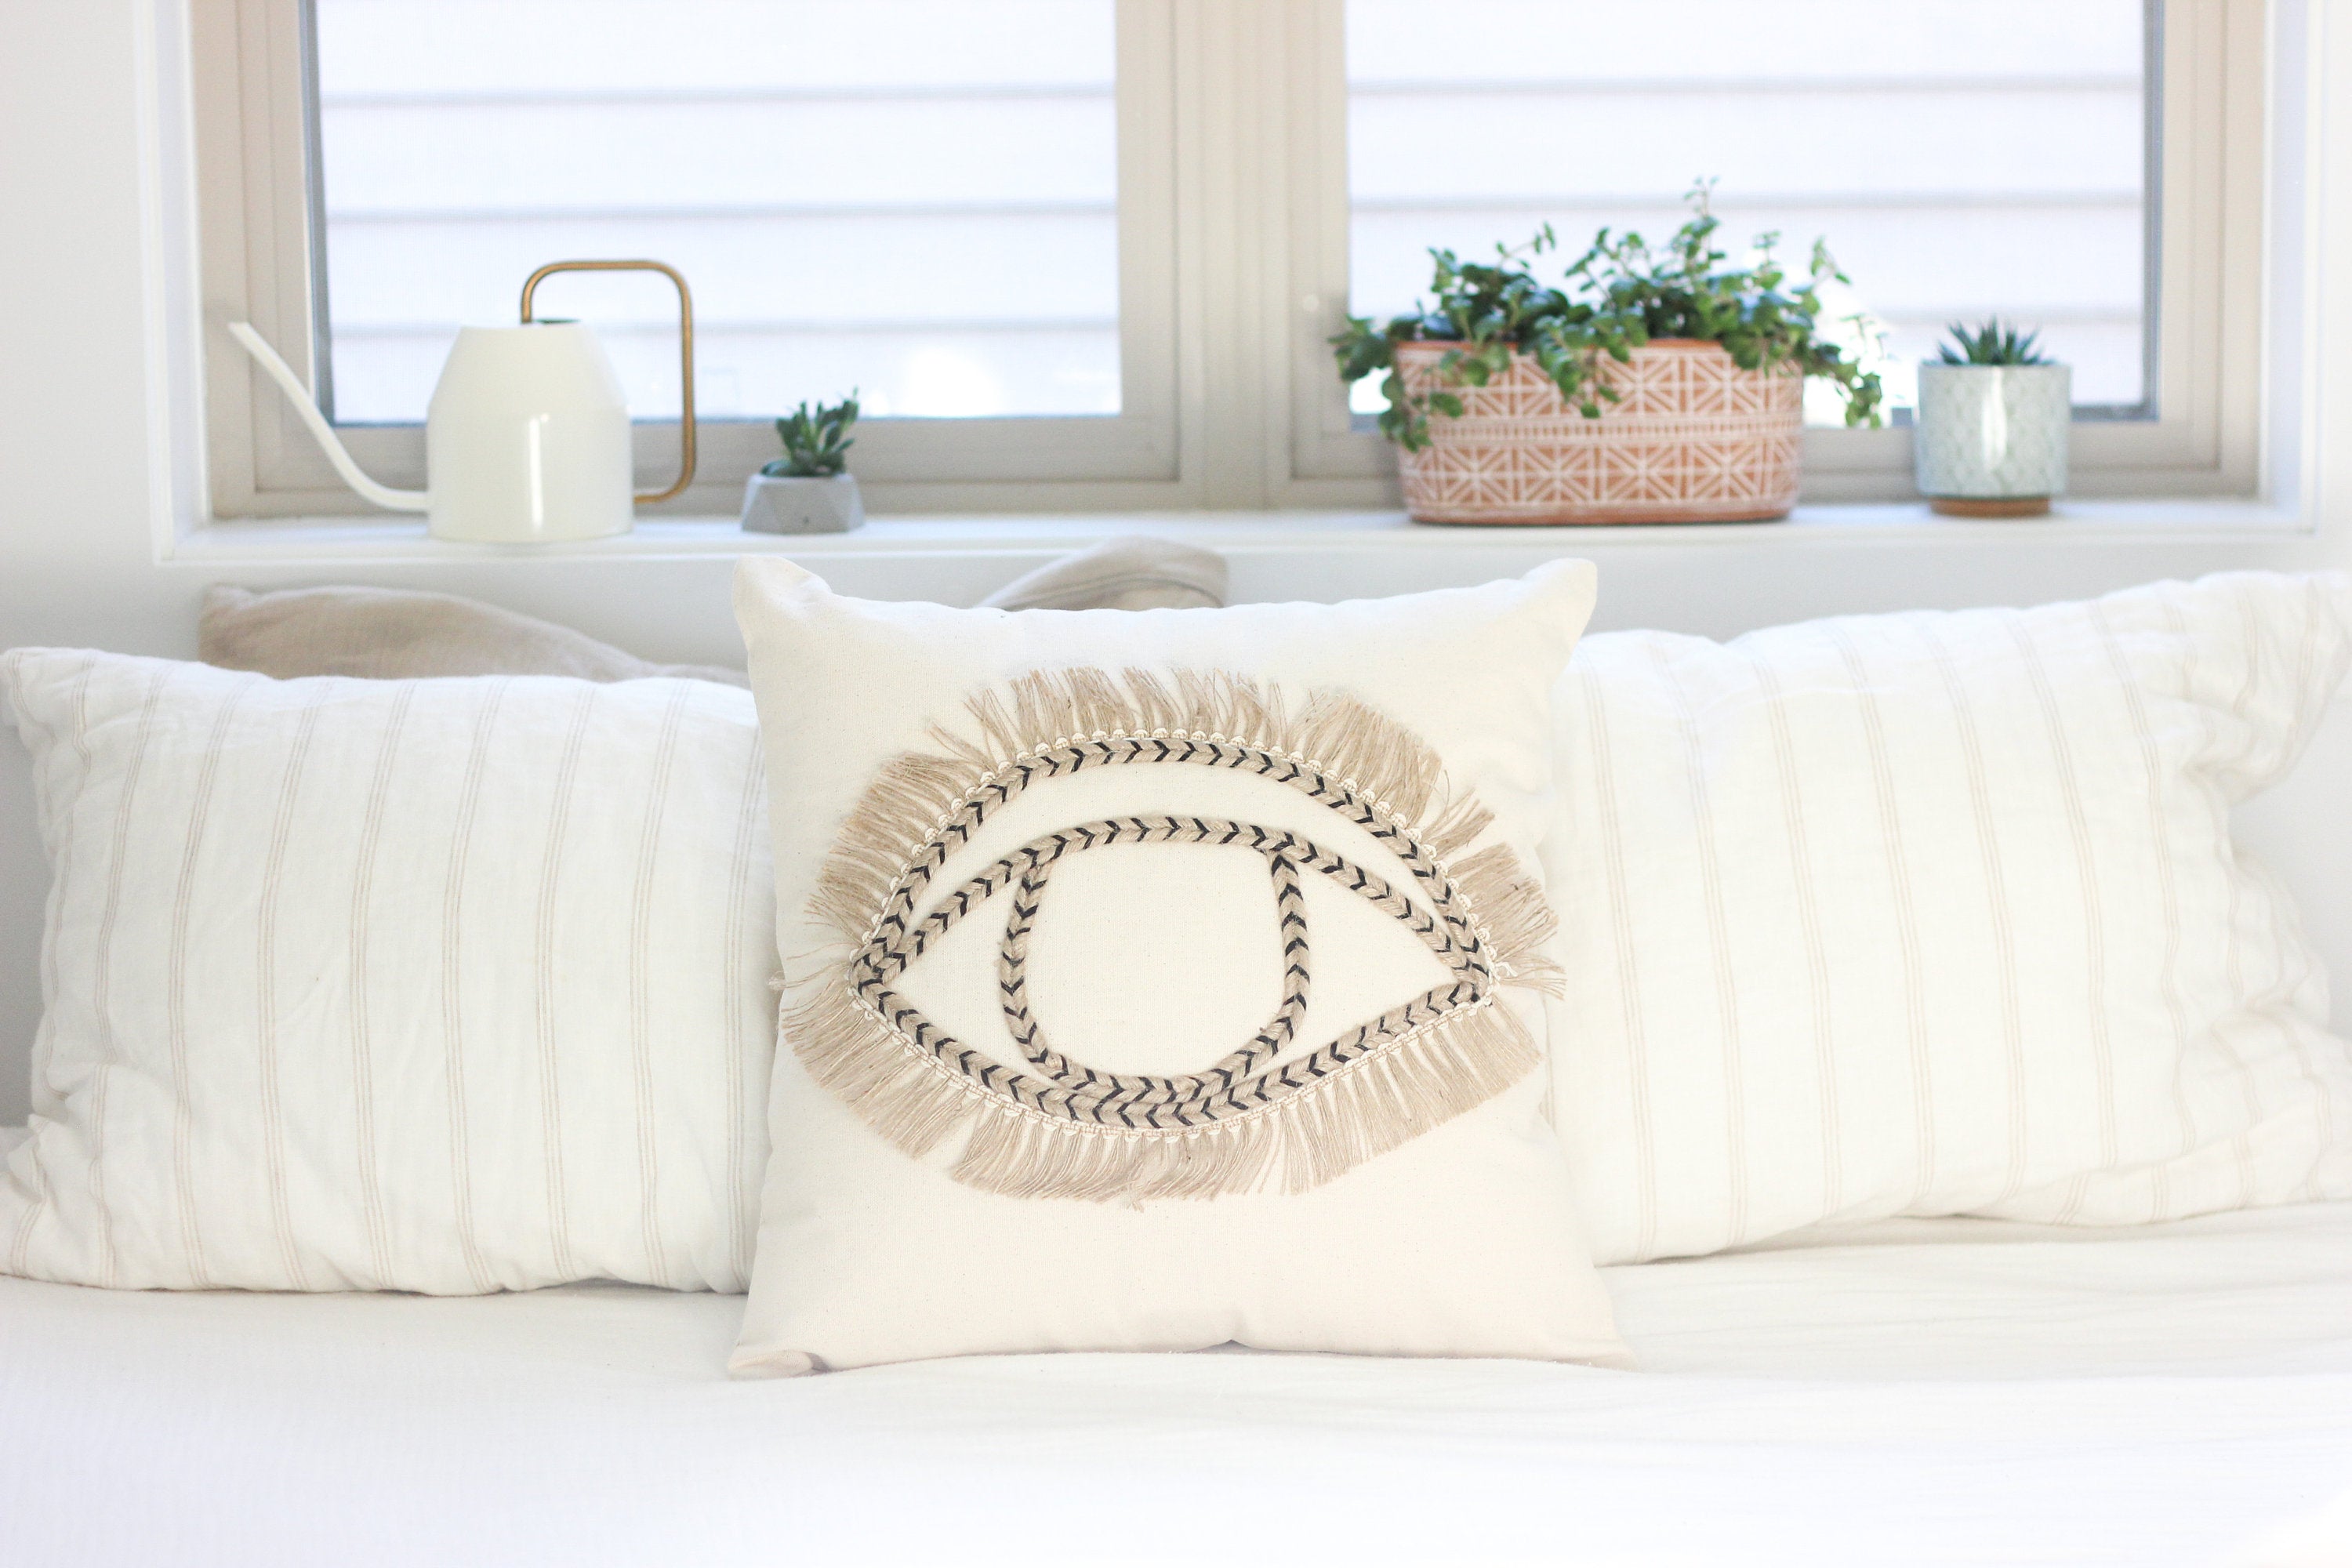 Boho Throw Cushion Pillow with Jute Embroidered Eye Motif